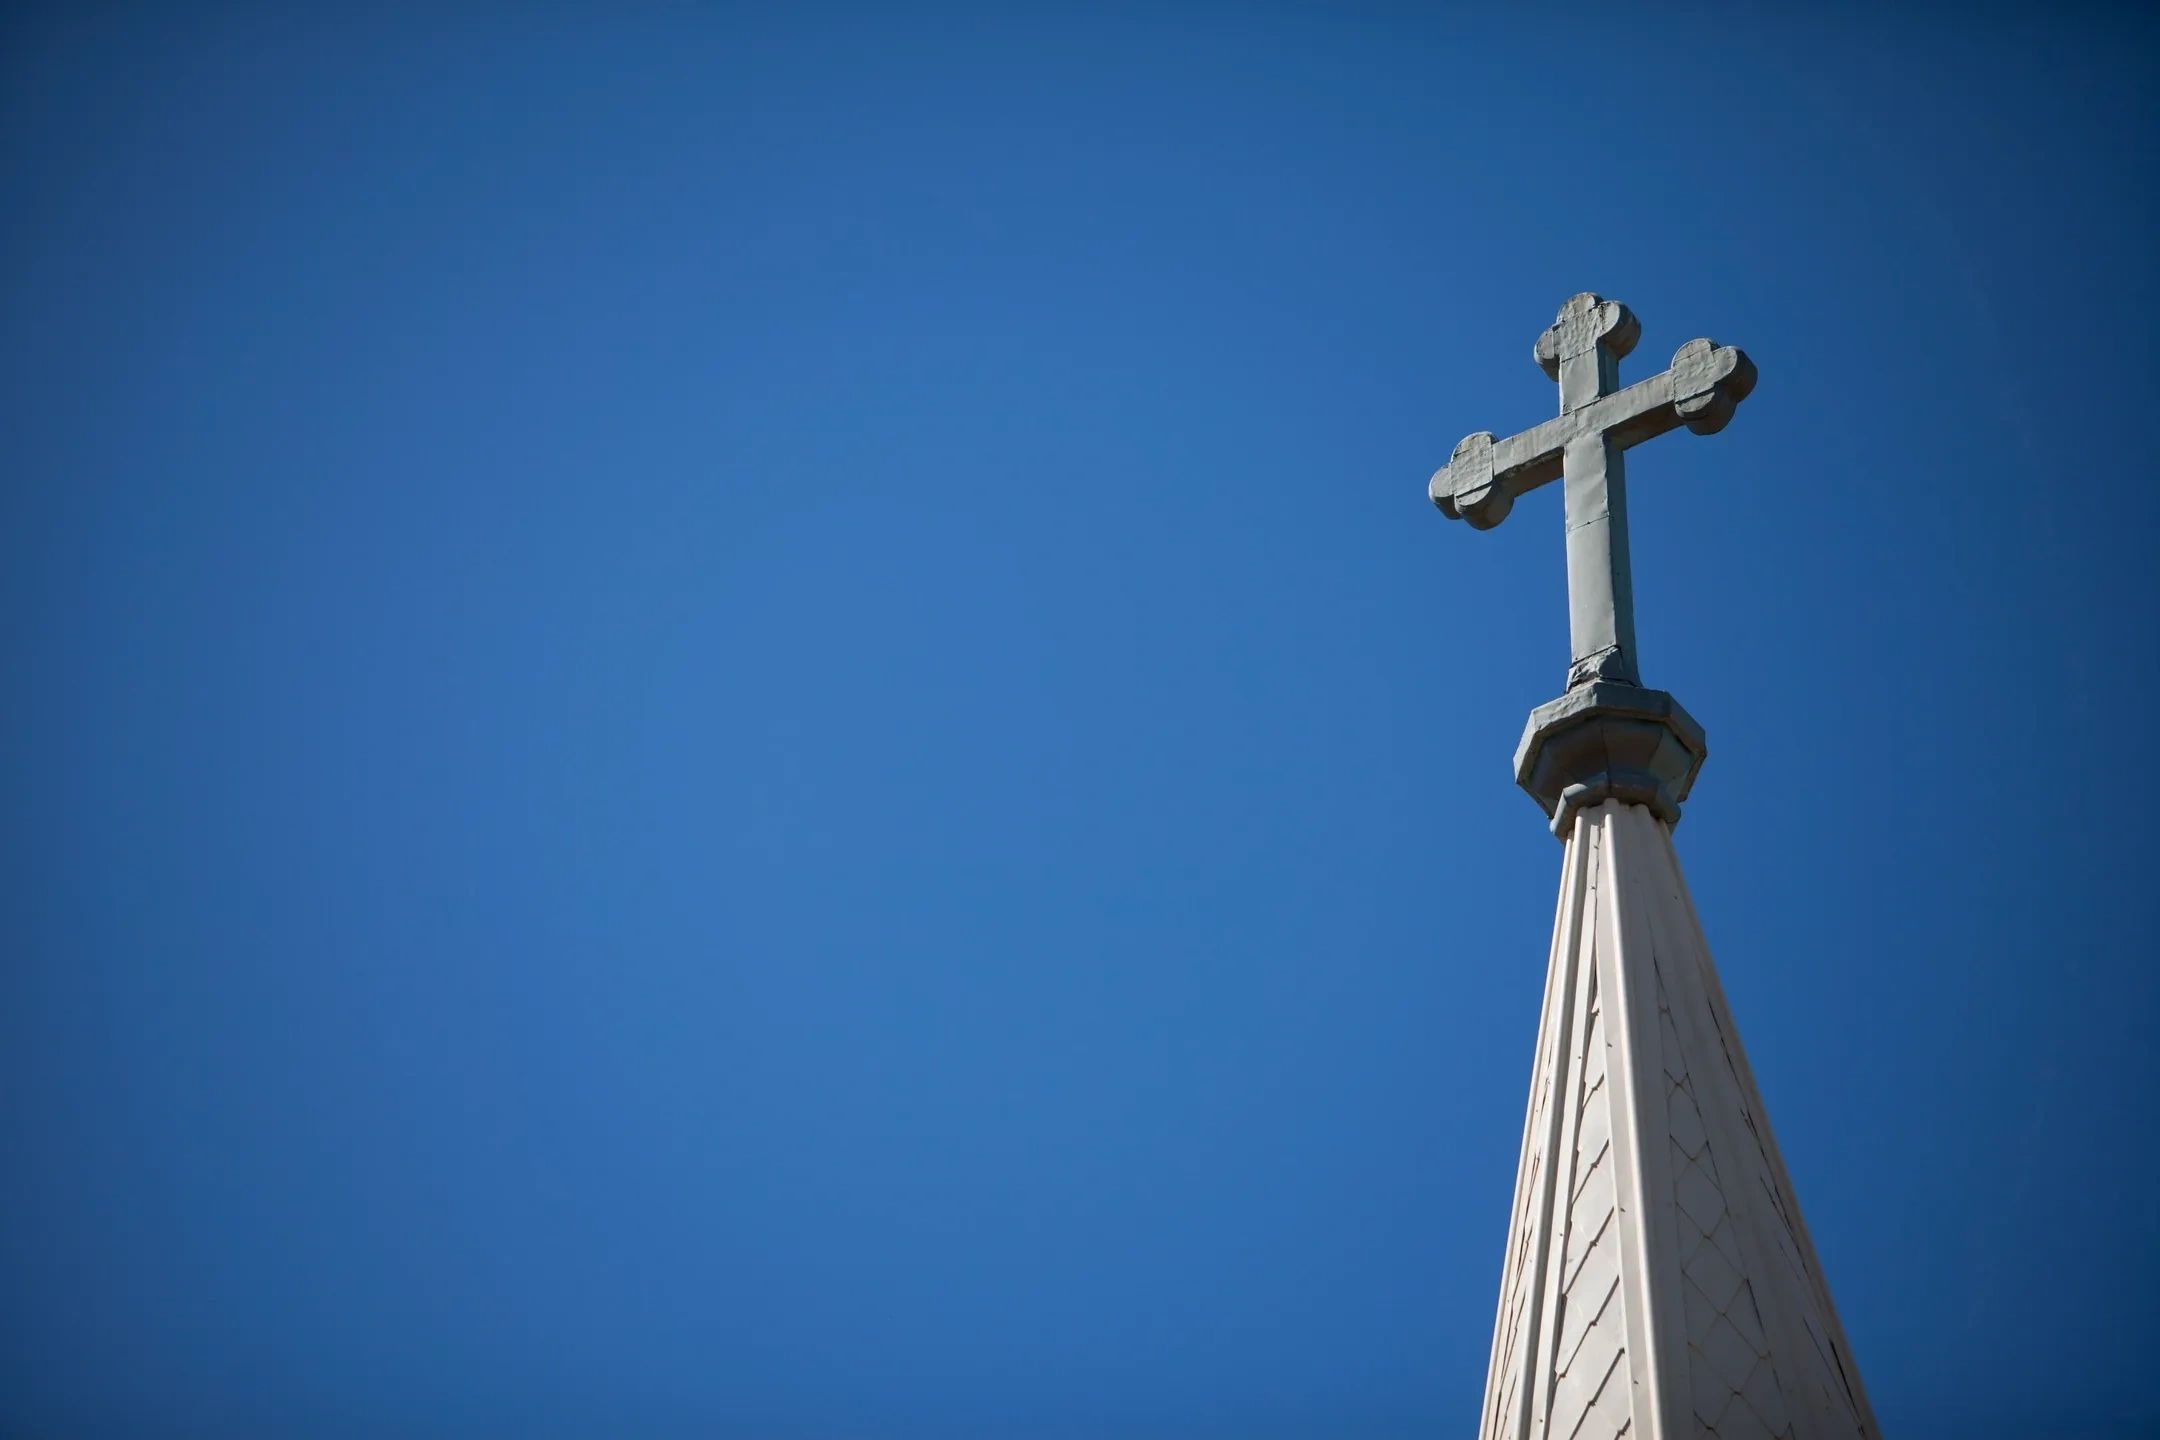 A church steeple with a cross on top against a clear blue sky